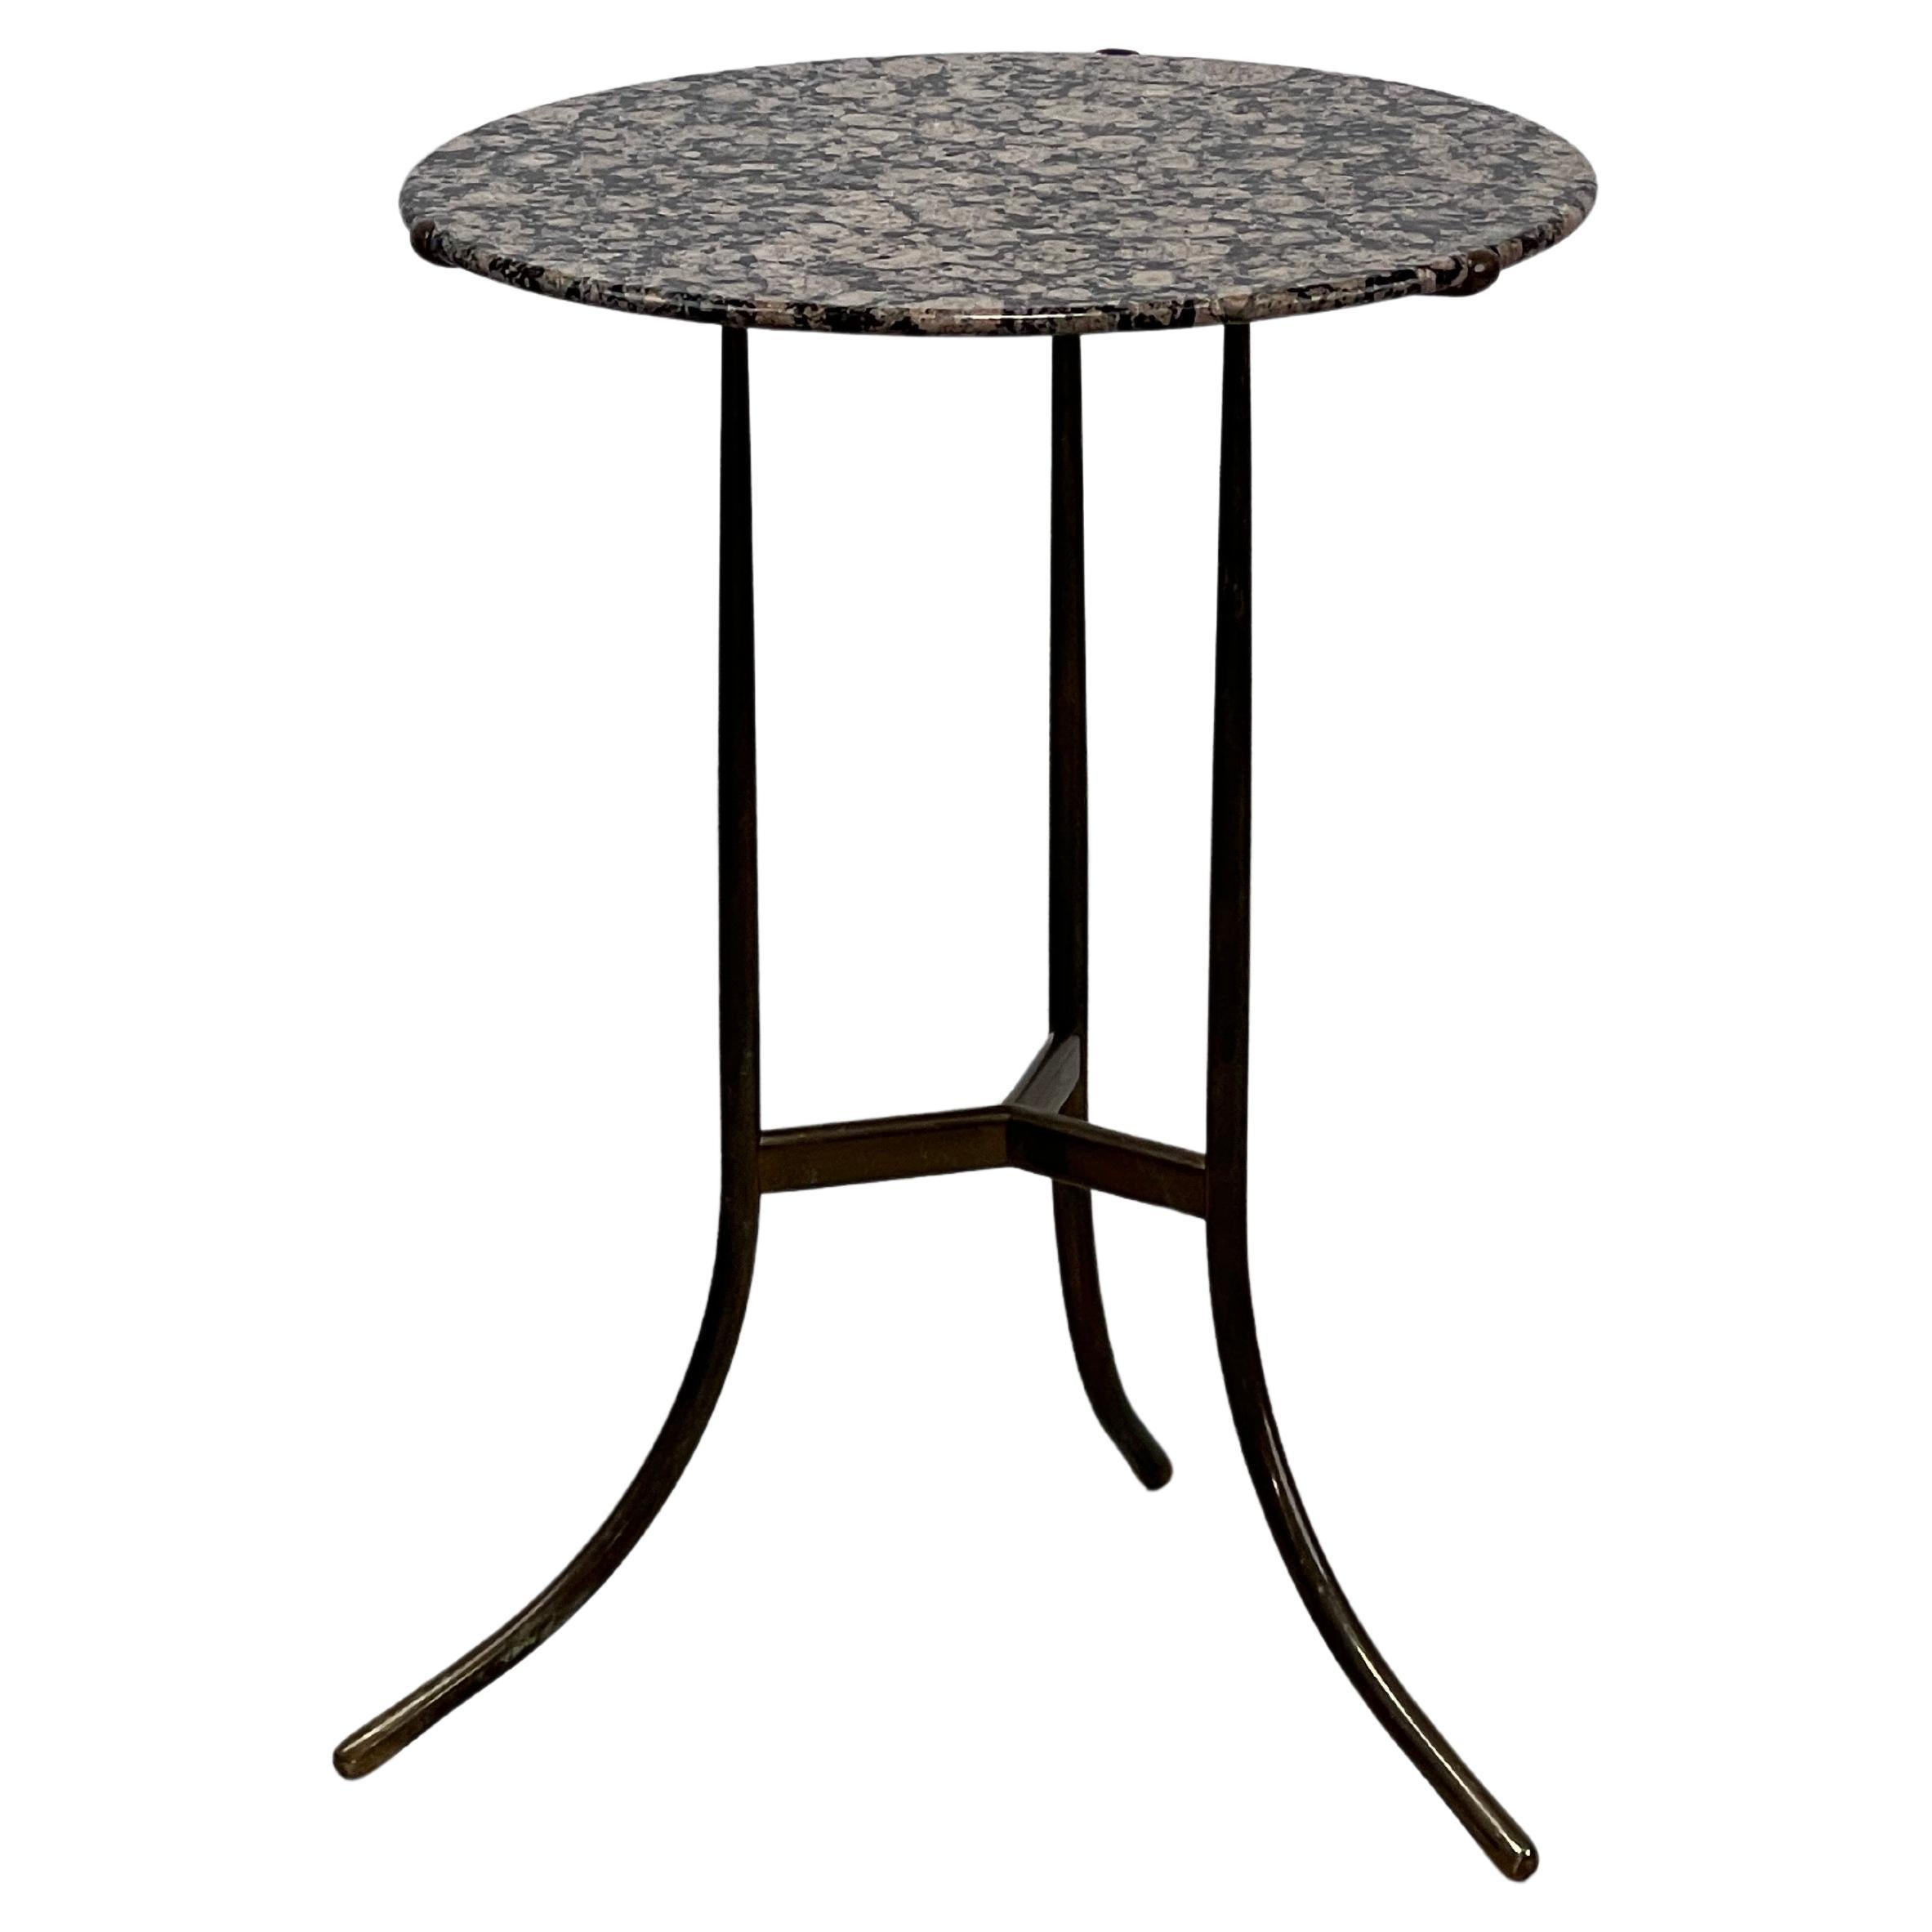 Cedric Hartman Table in Bronze and Granite For Sale